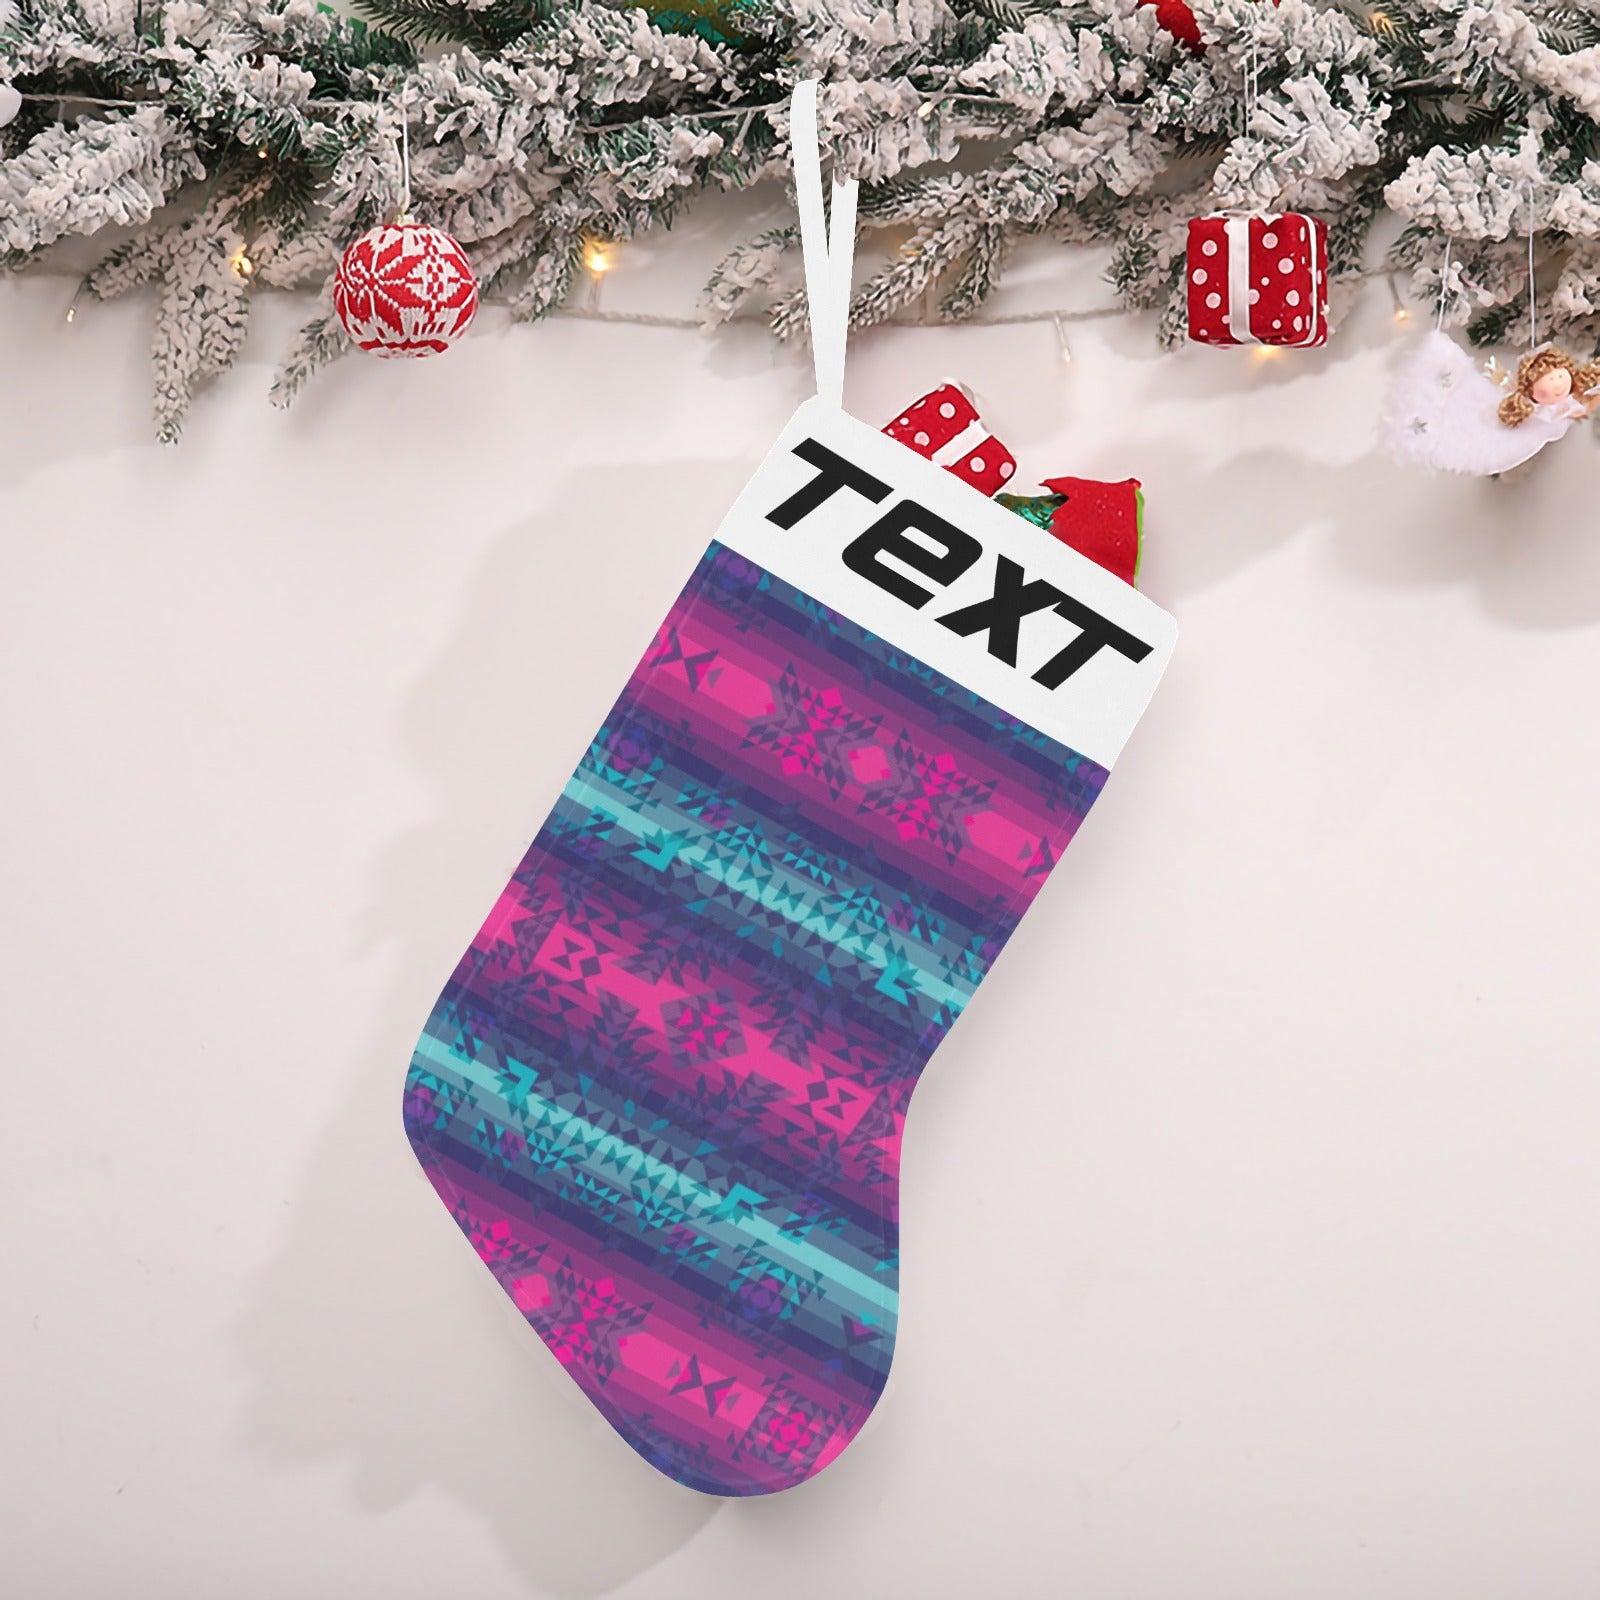 Dimensional Brightburn Christmas Stocking (Custom Text on The Top)